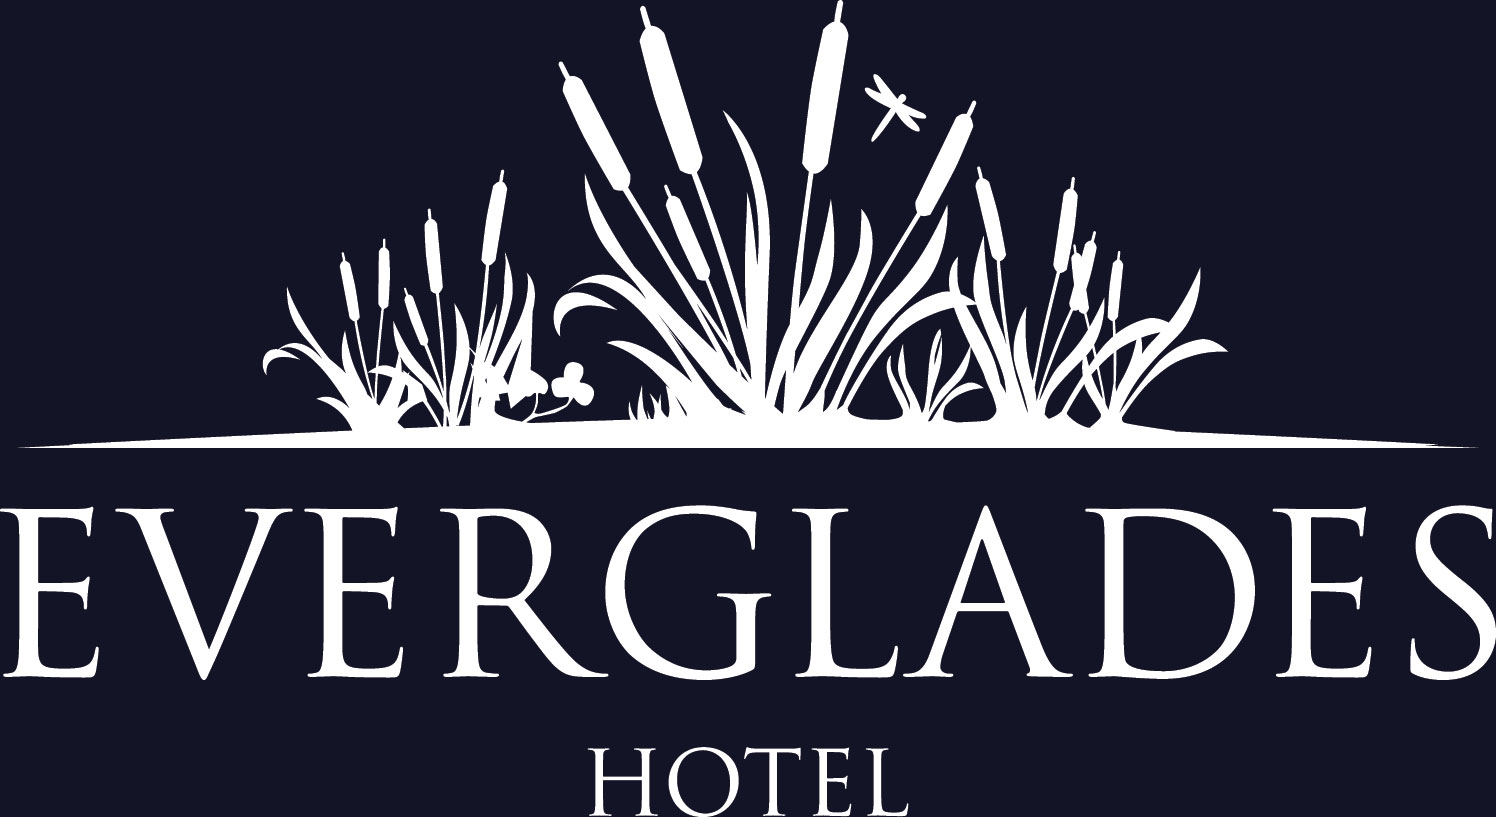 The Everglades Hotel